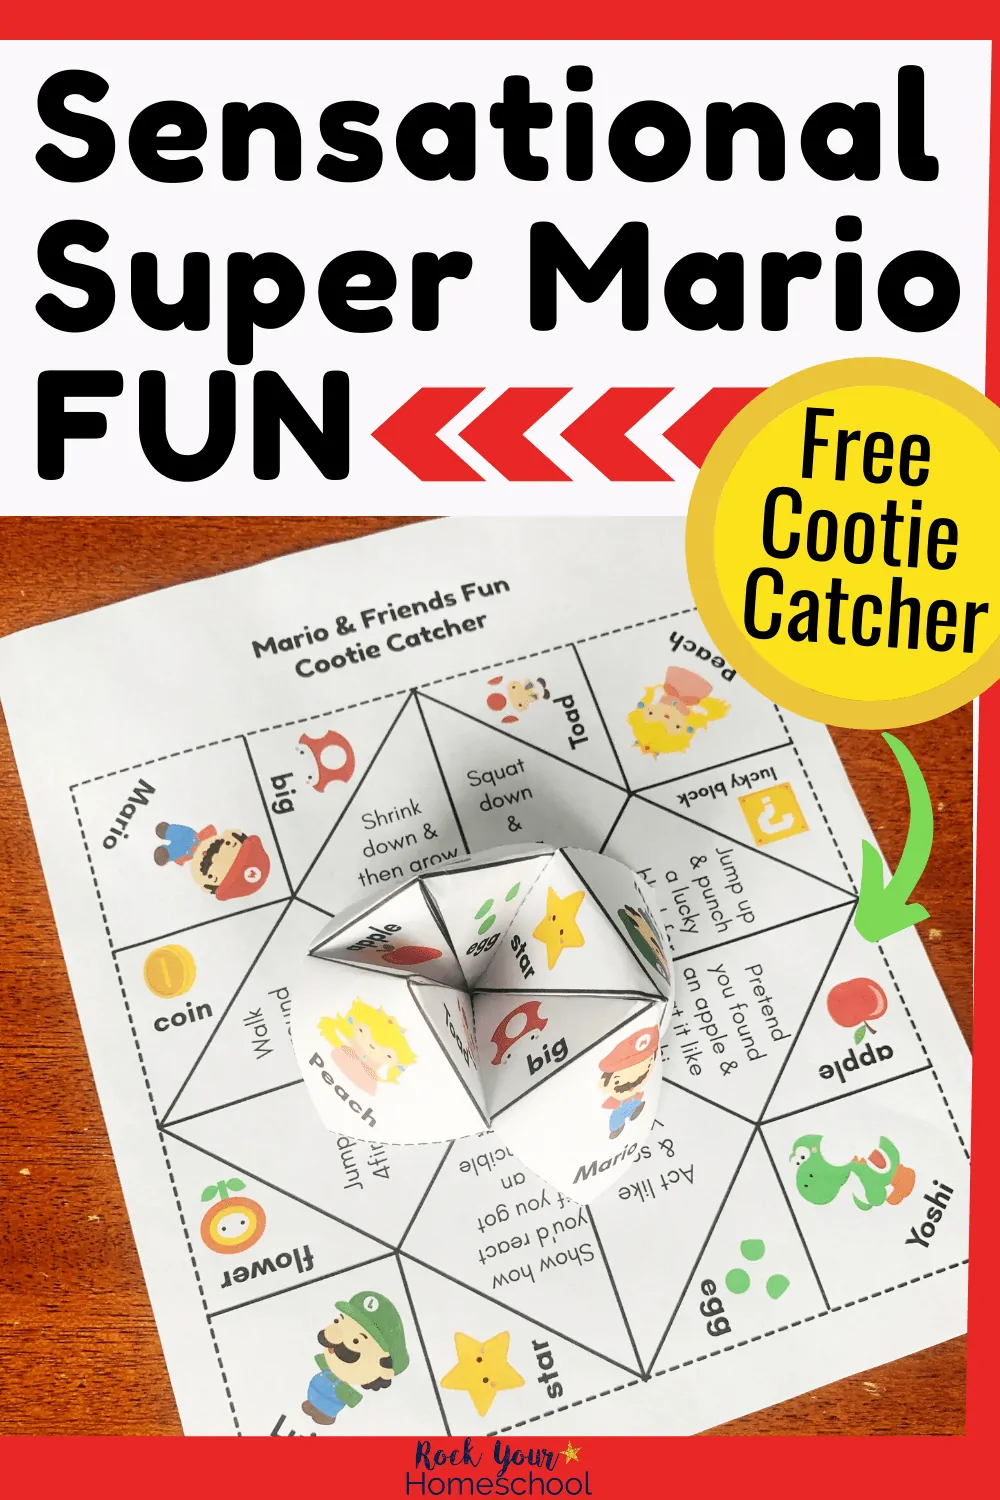 Sensational Super Mario Fun with Free Cootie Catcher